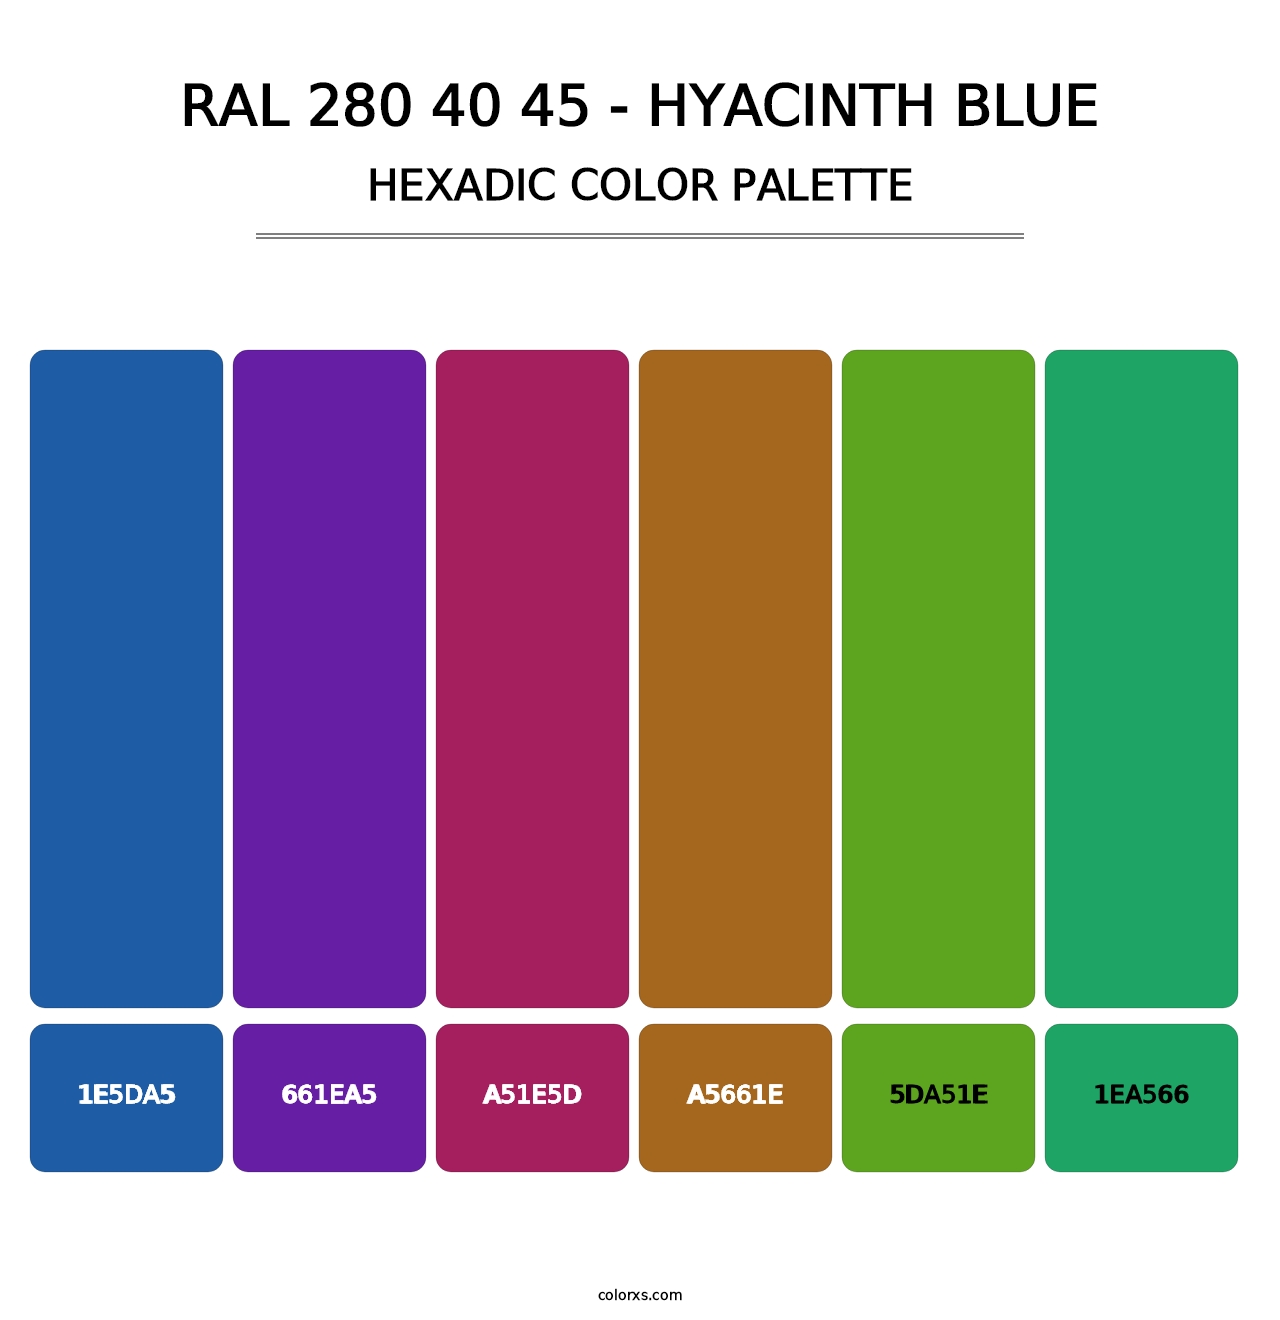 RAL 280 40 45 - Hyacinth Blue - Hexadic Color Palette